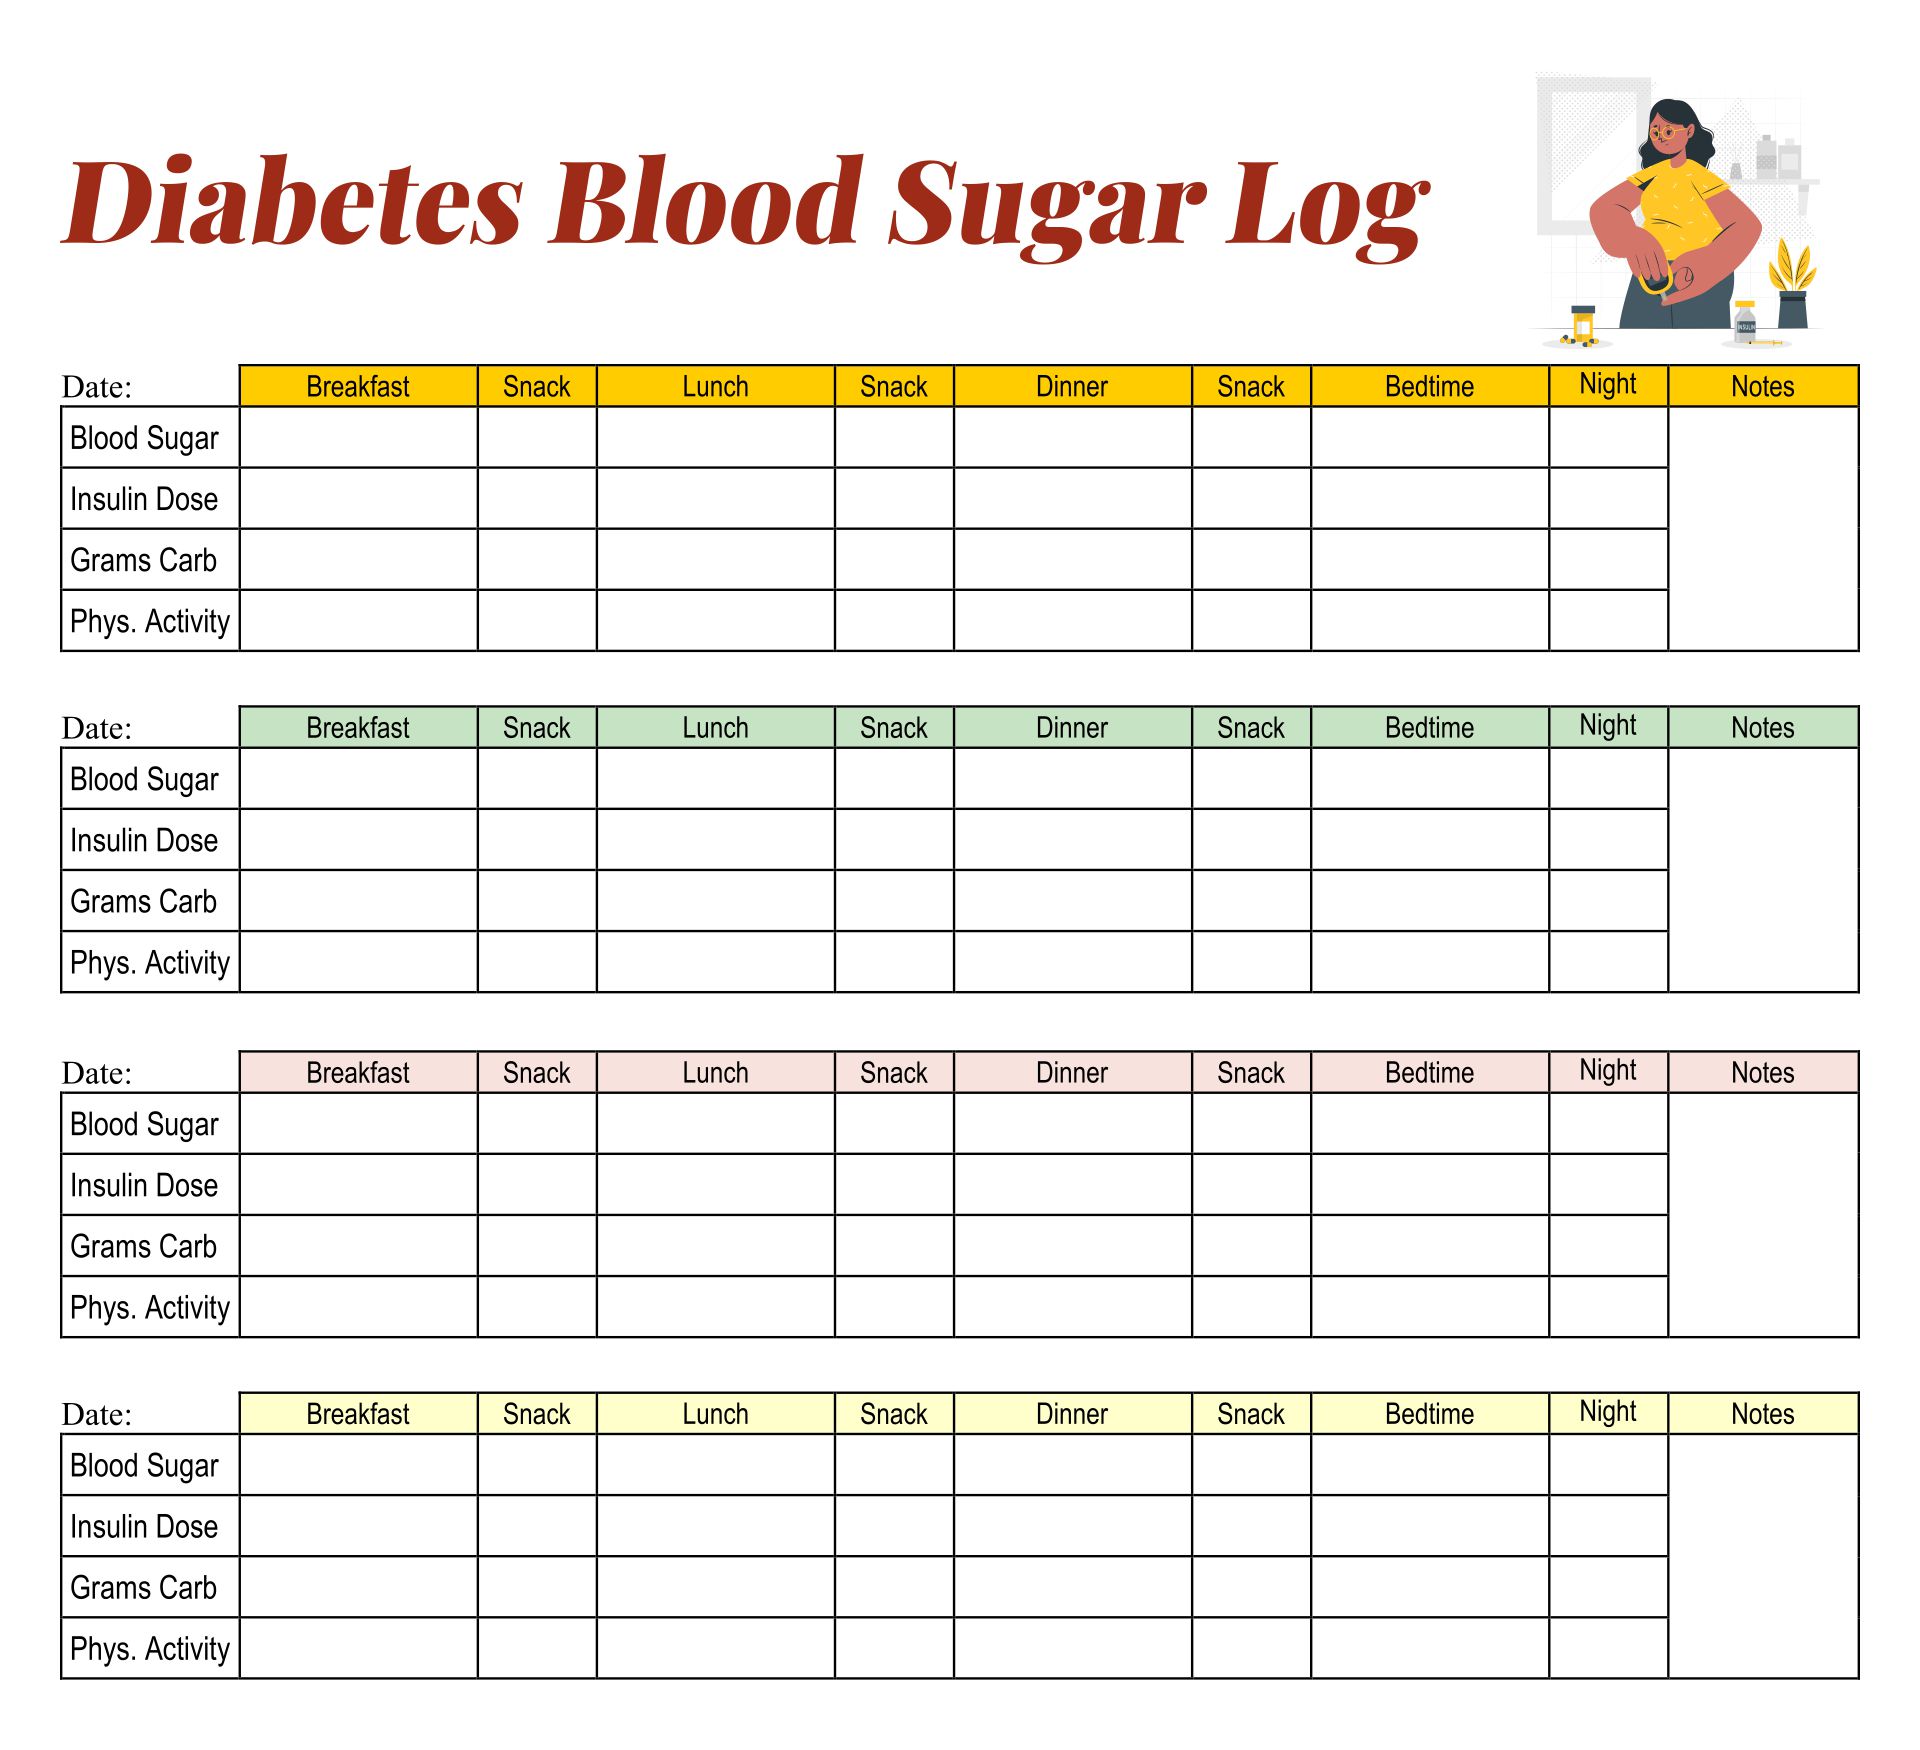 Diabetes Blood Sugar Log Book